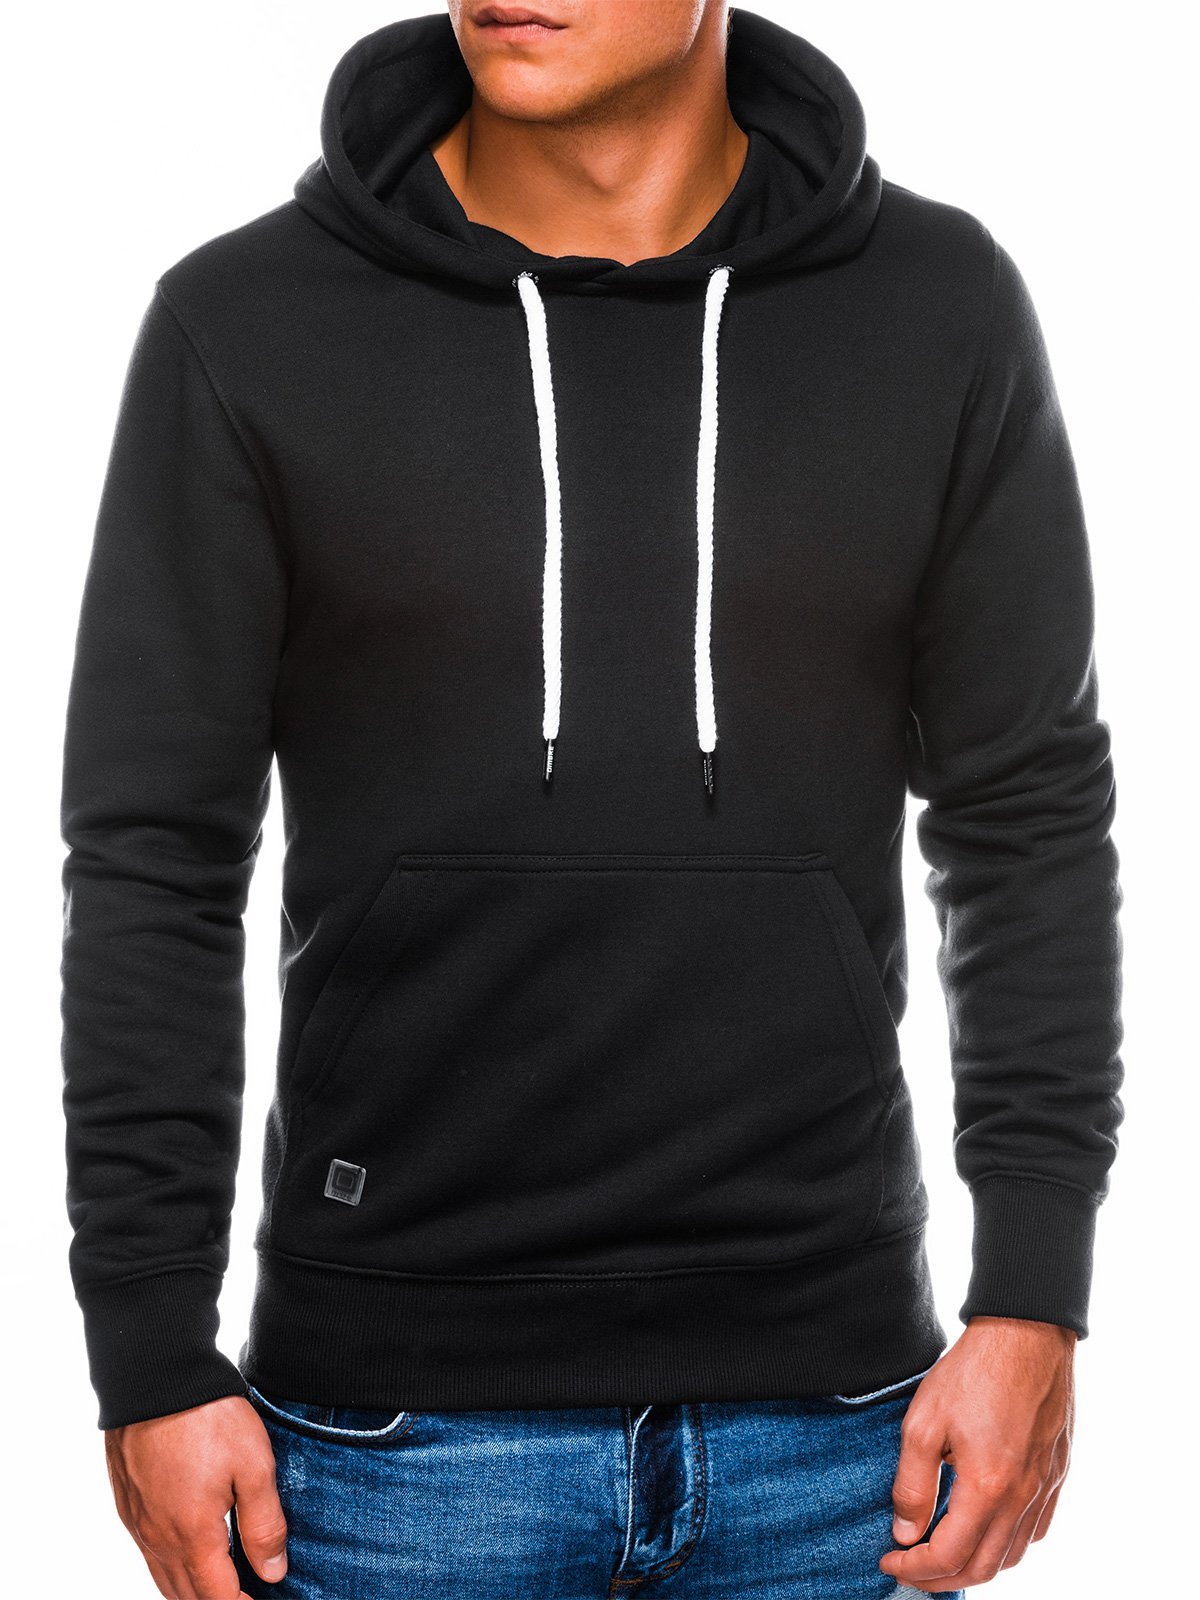 Men's hooded sweatshirt B979 - black | MODONE wholesale - Clothing For Men